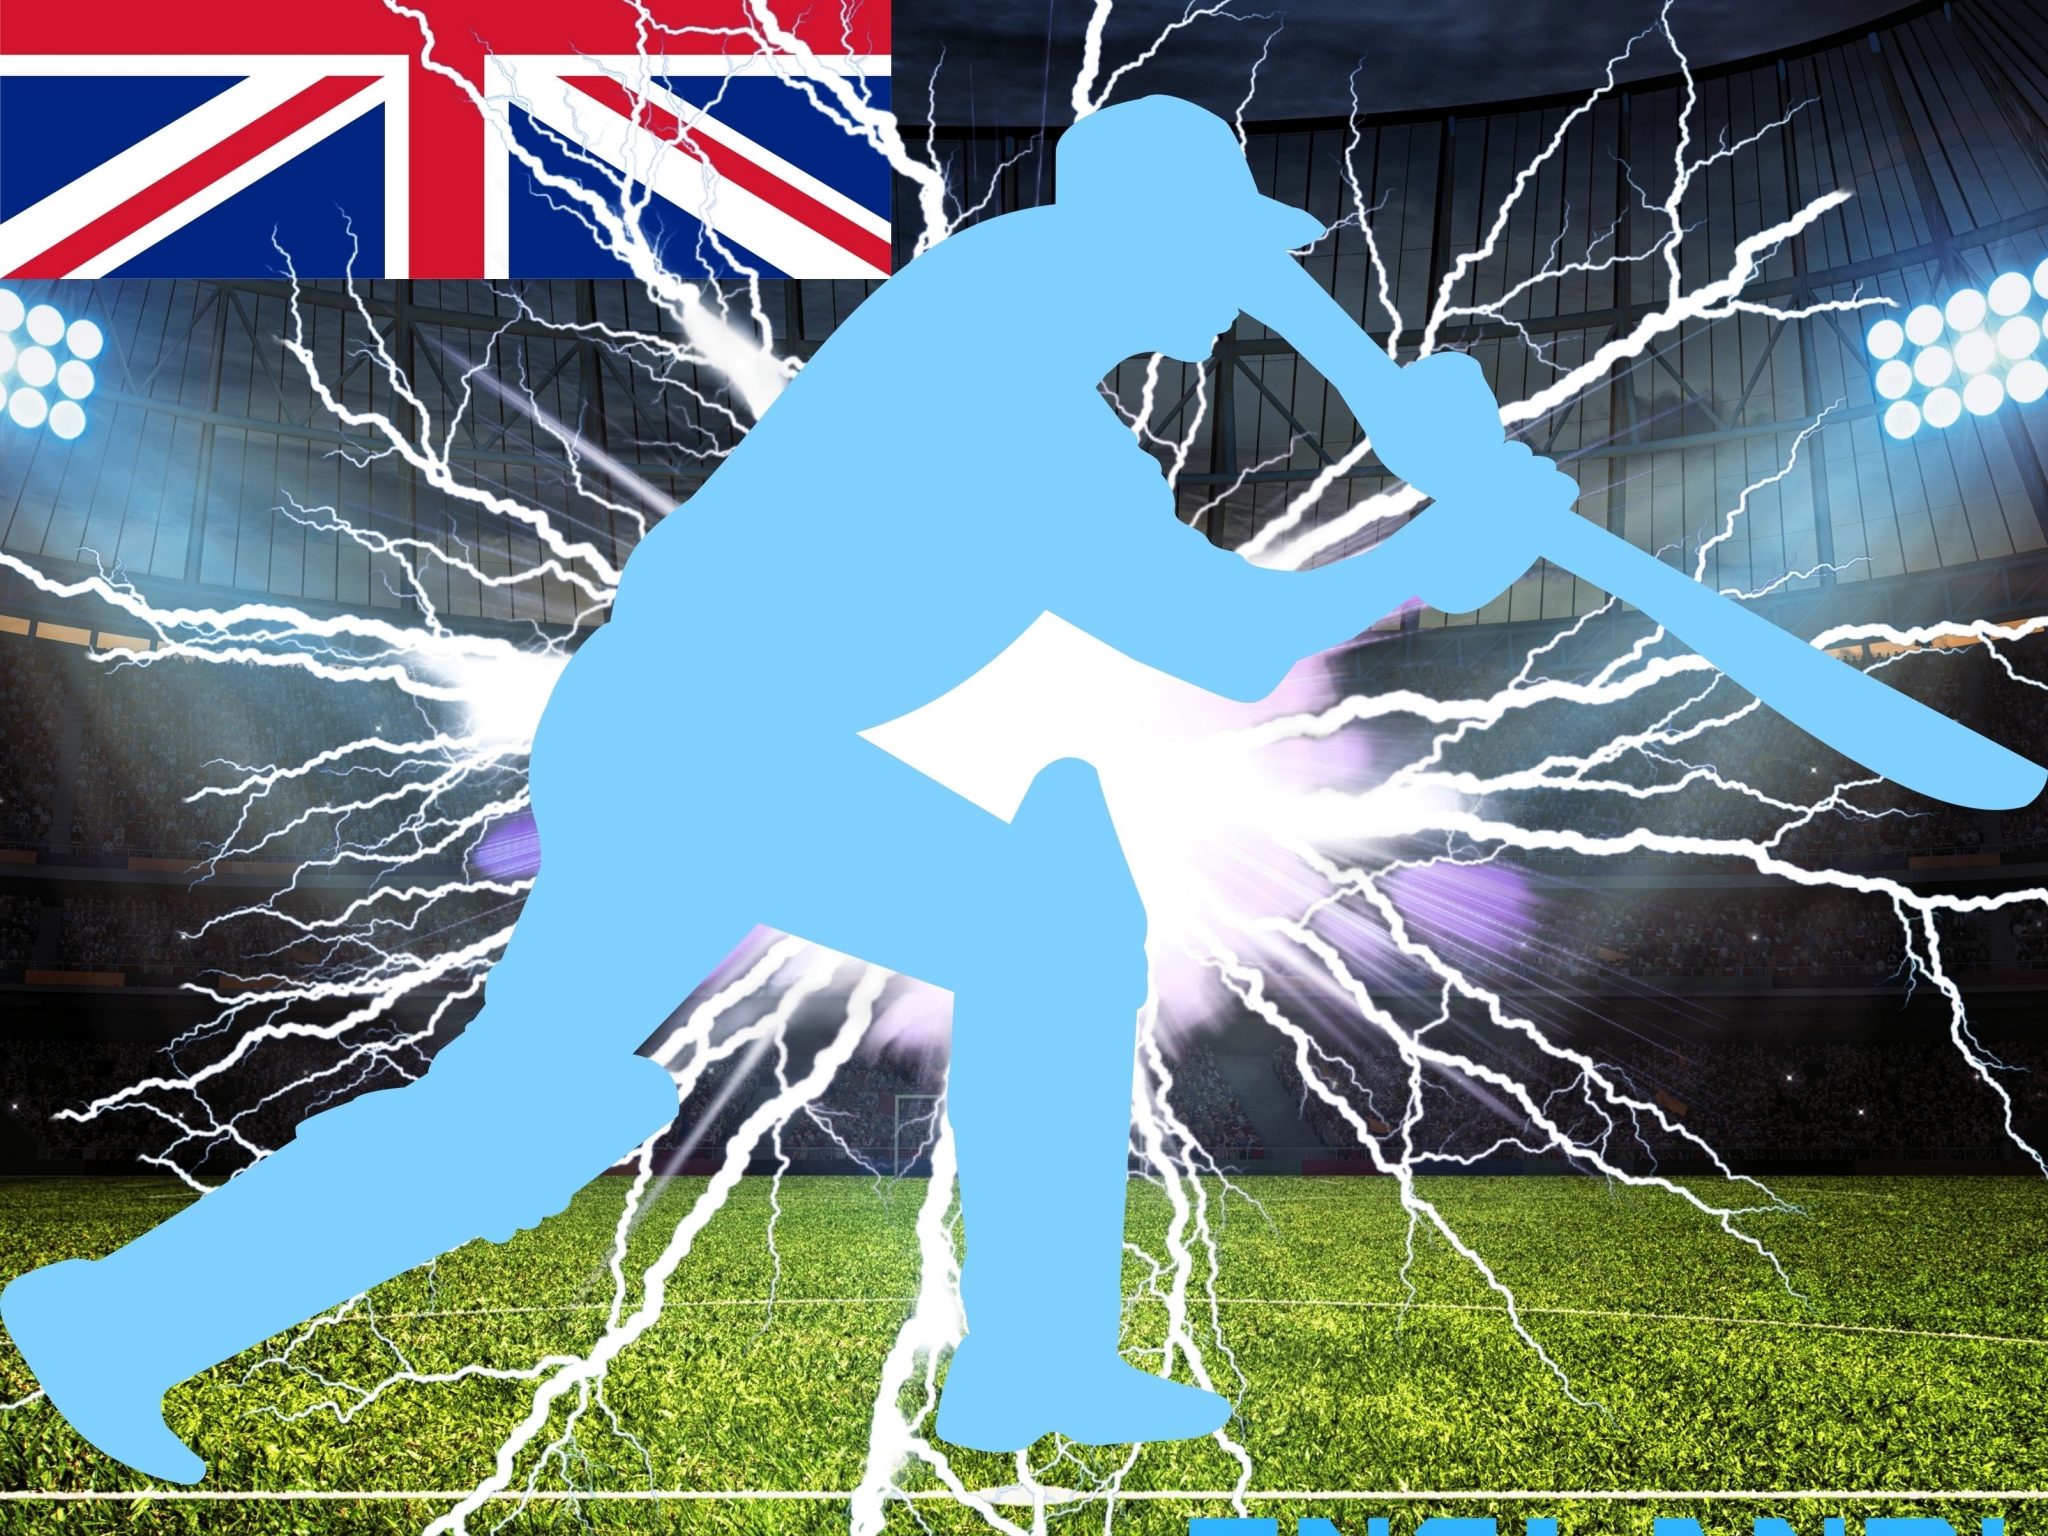 2048x1536 wallpaper England Cricket Stadium iPad Wallpaper 2048x1536 pixels resolution